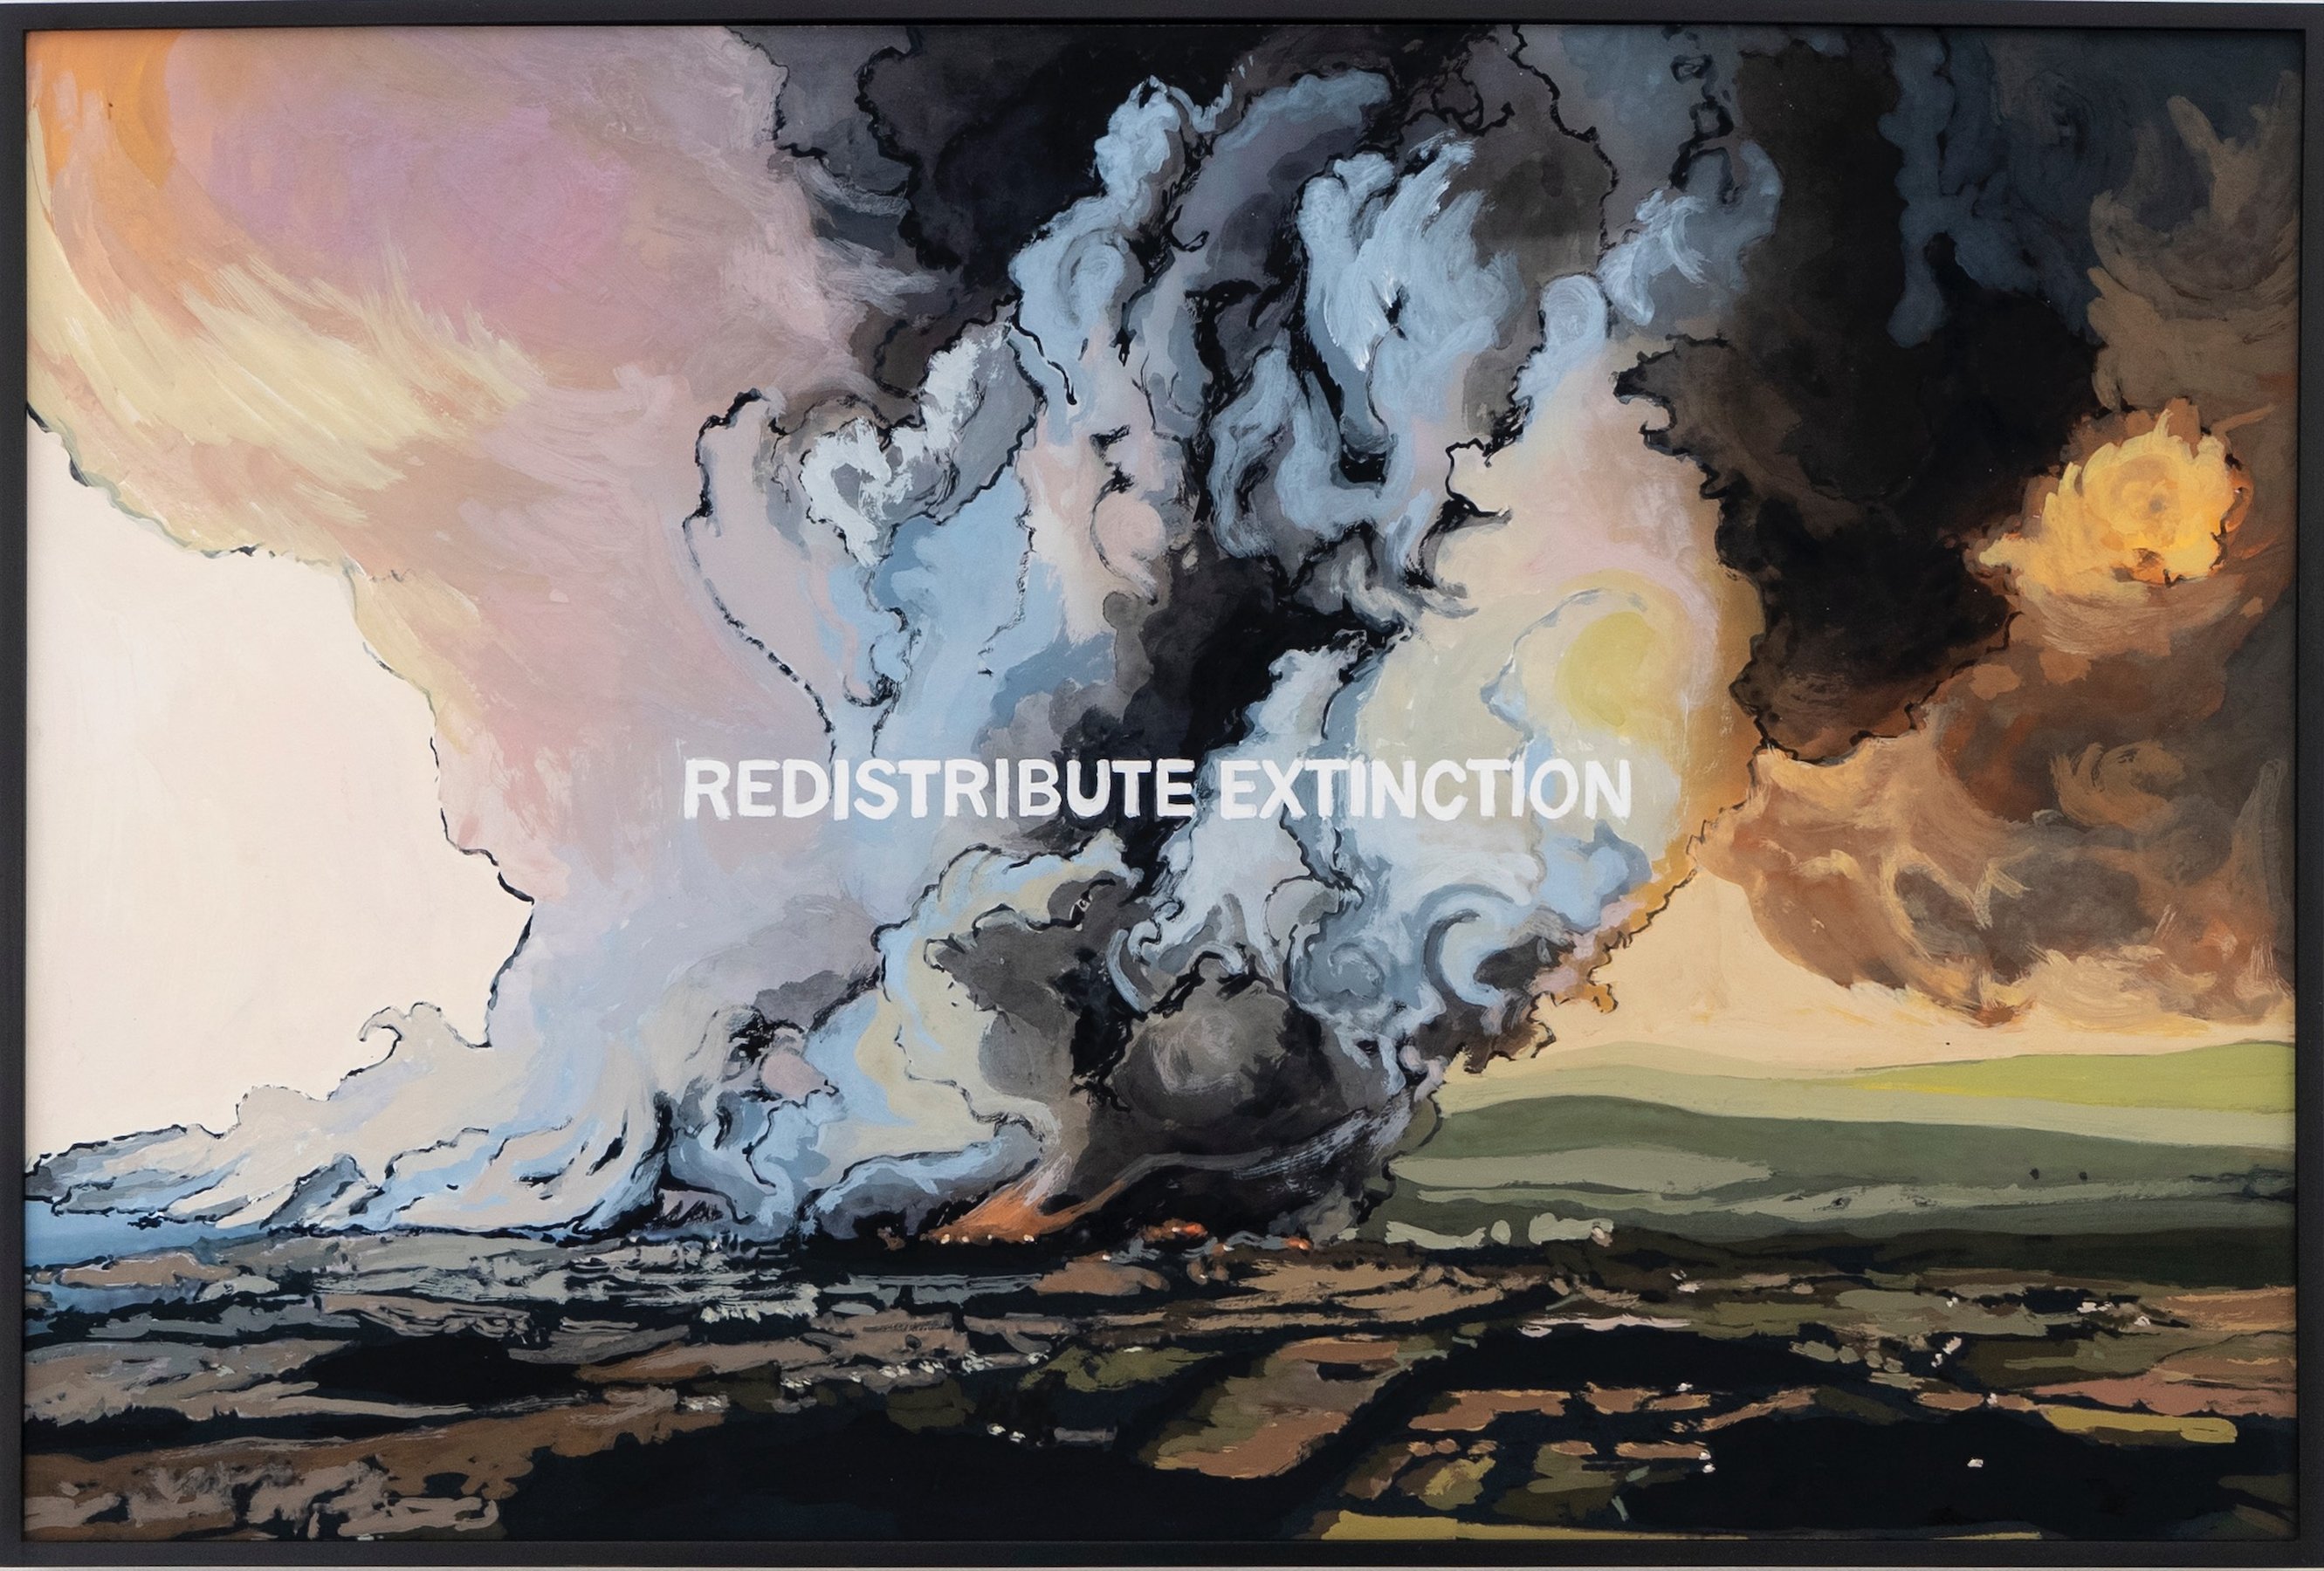 Redistribute Extinction #3